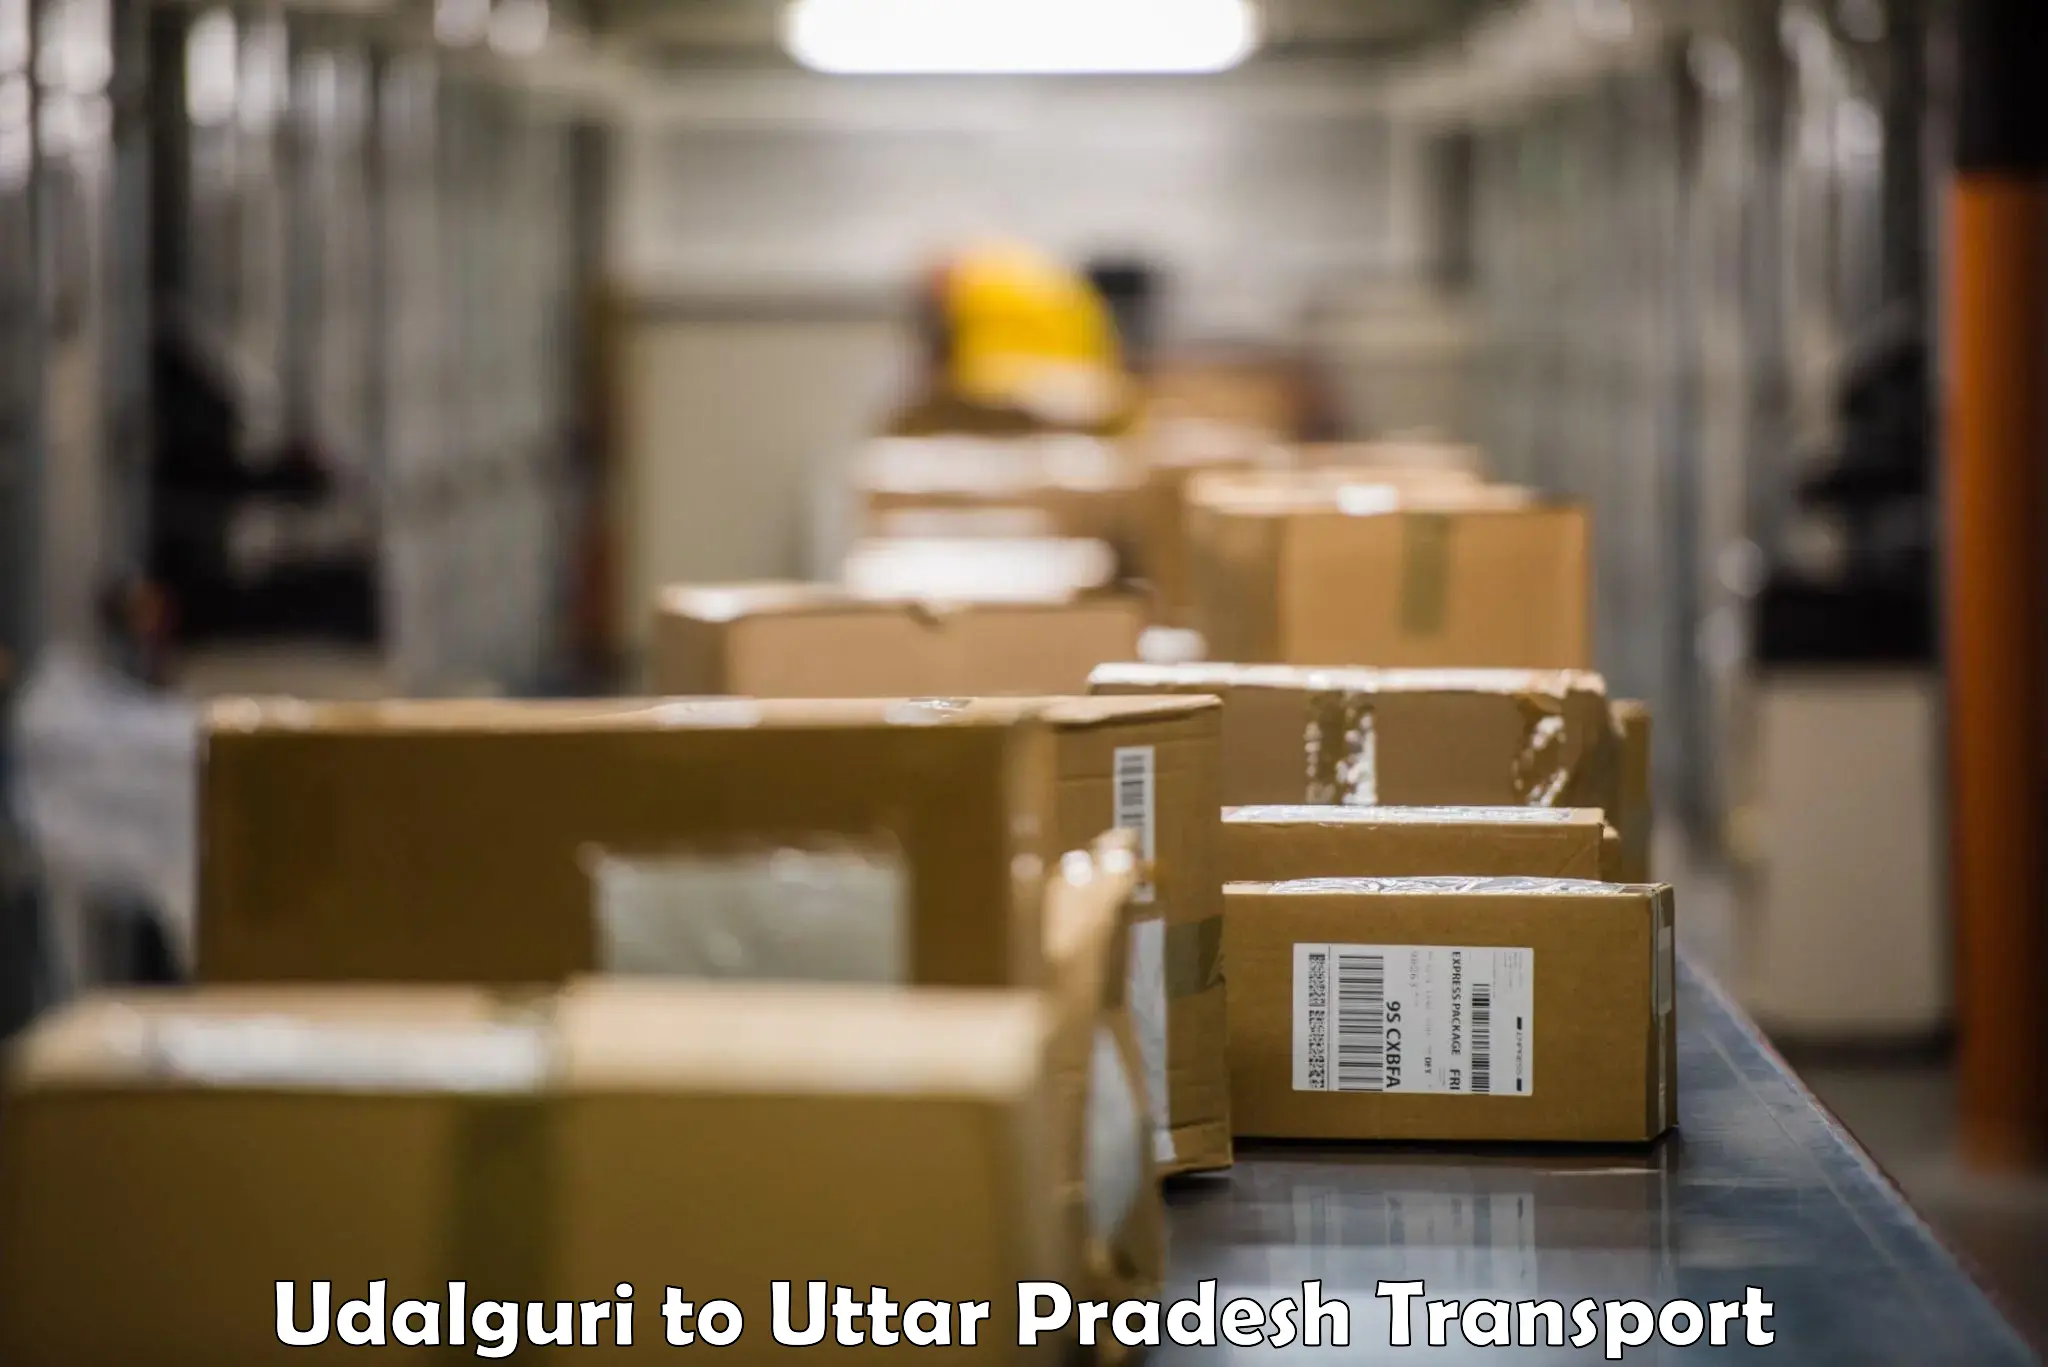 Furniture transport service Udalguri to Allahabad